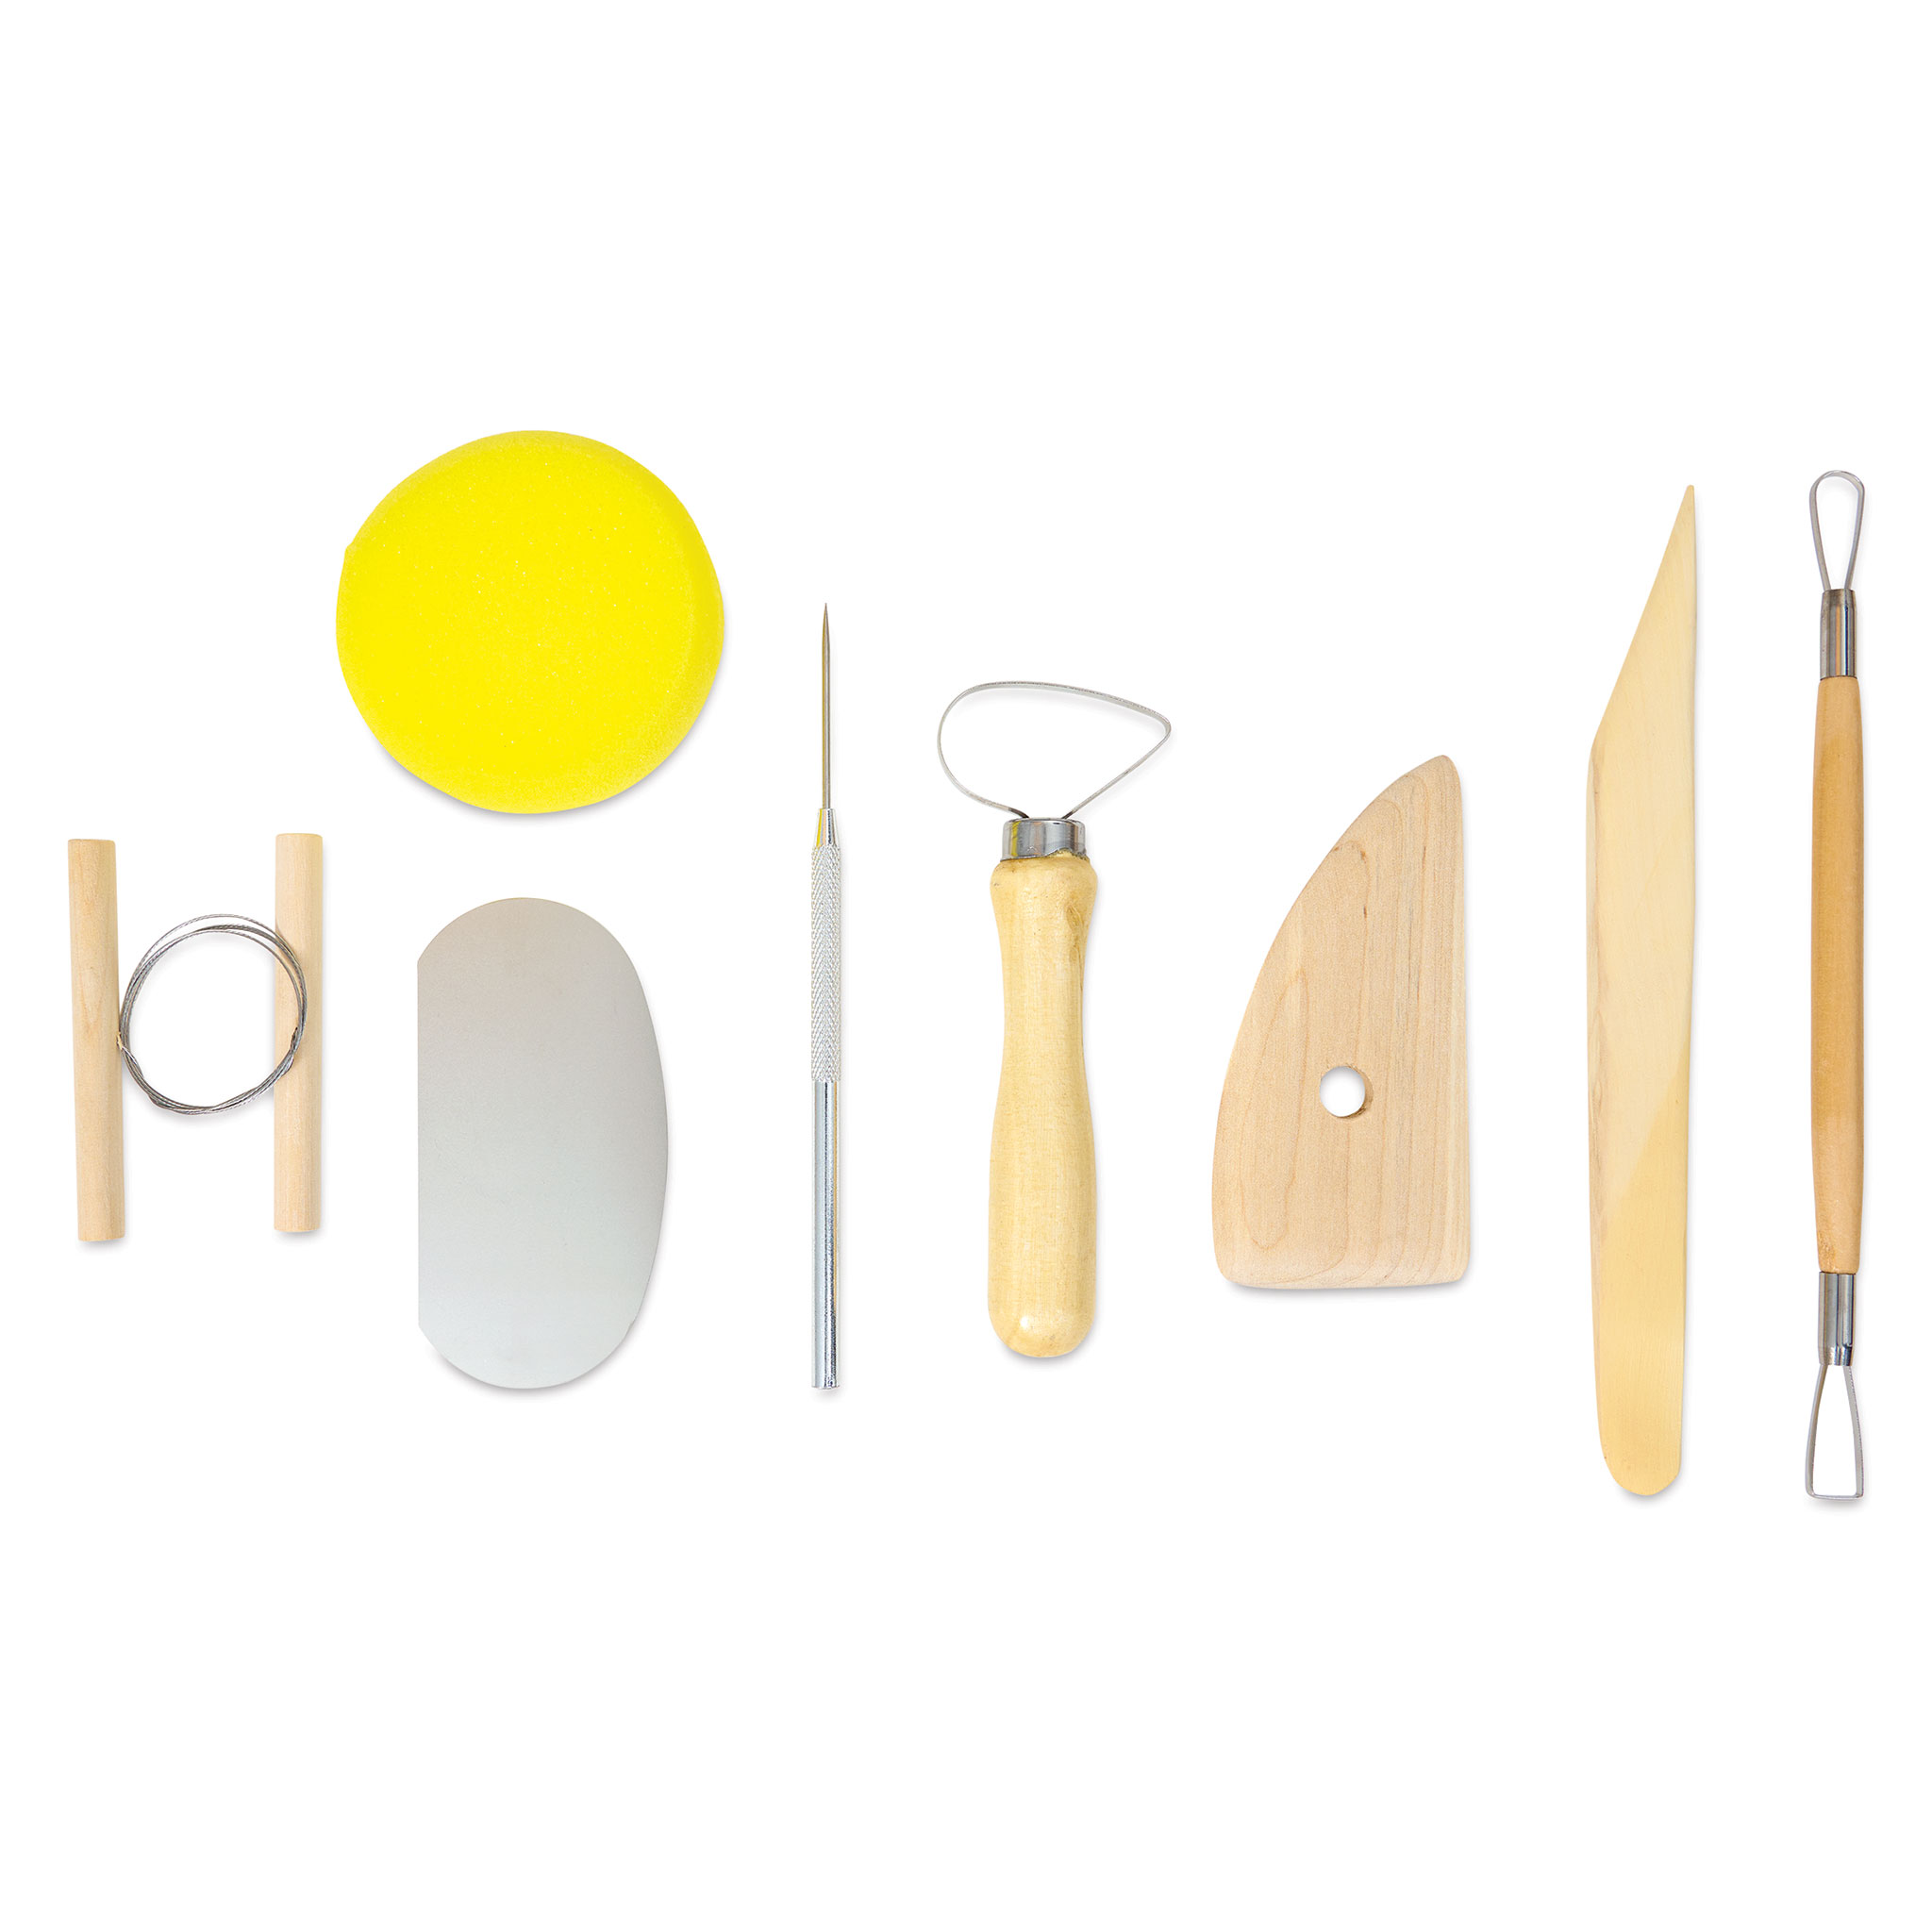 Ceramics tool kit — Burkhead Art Center